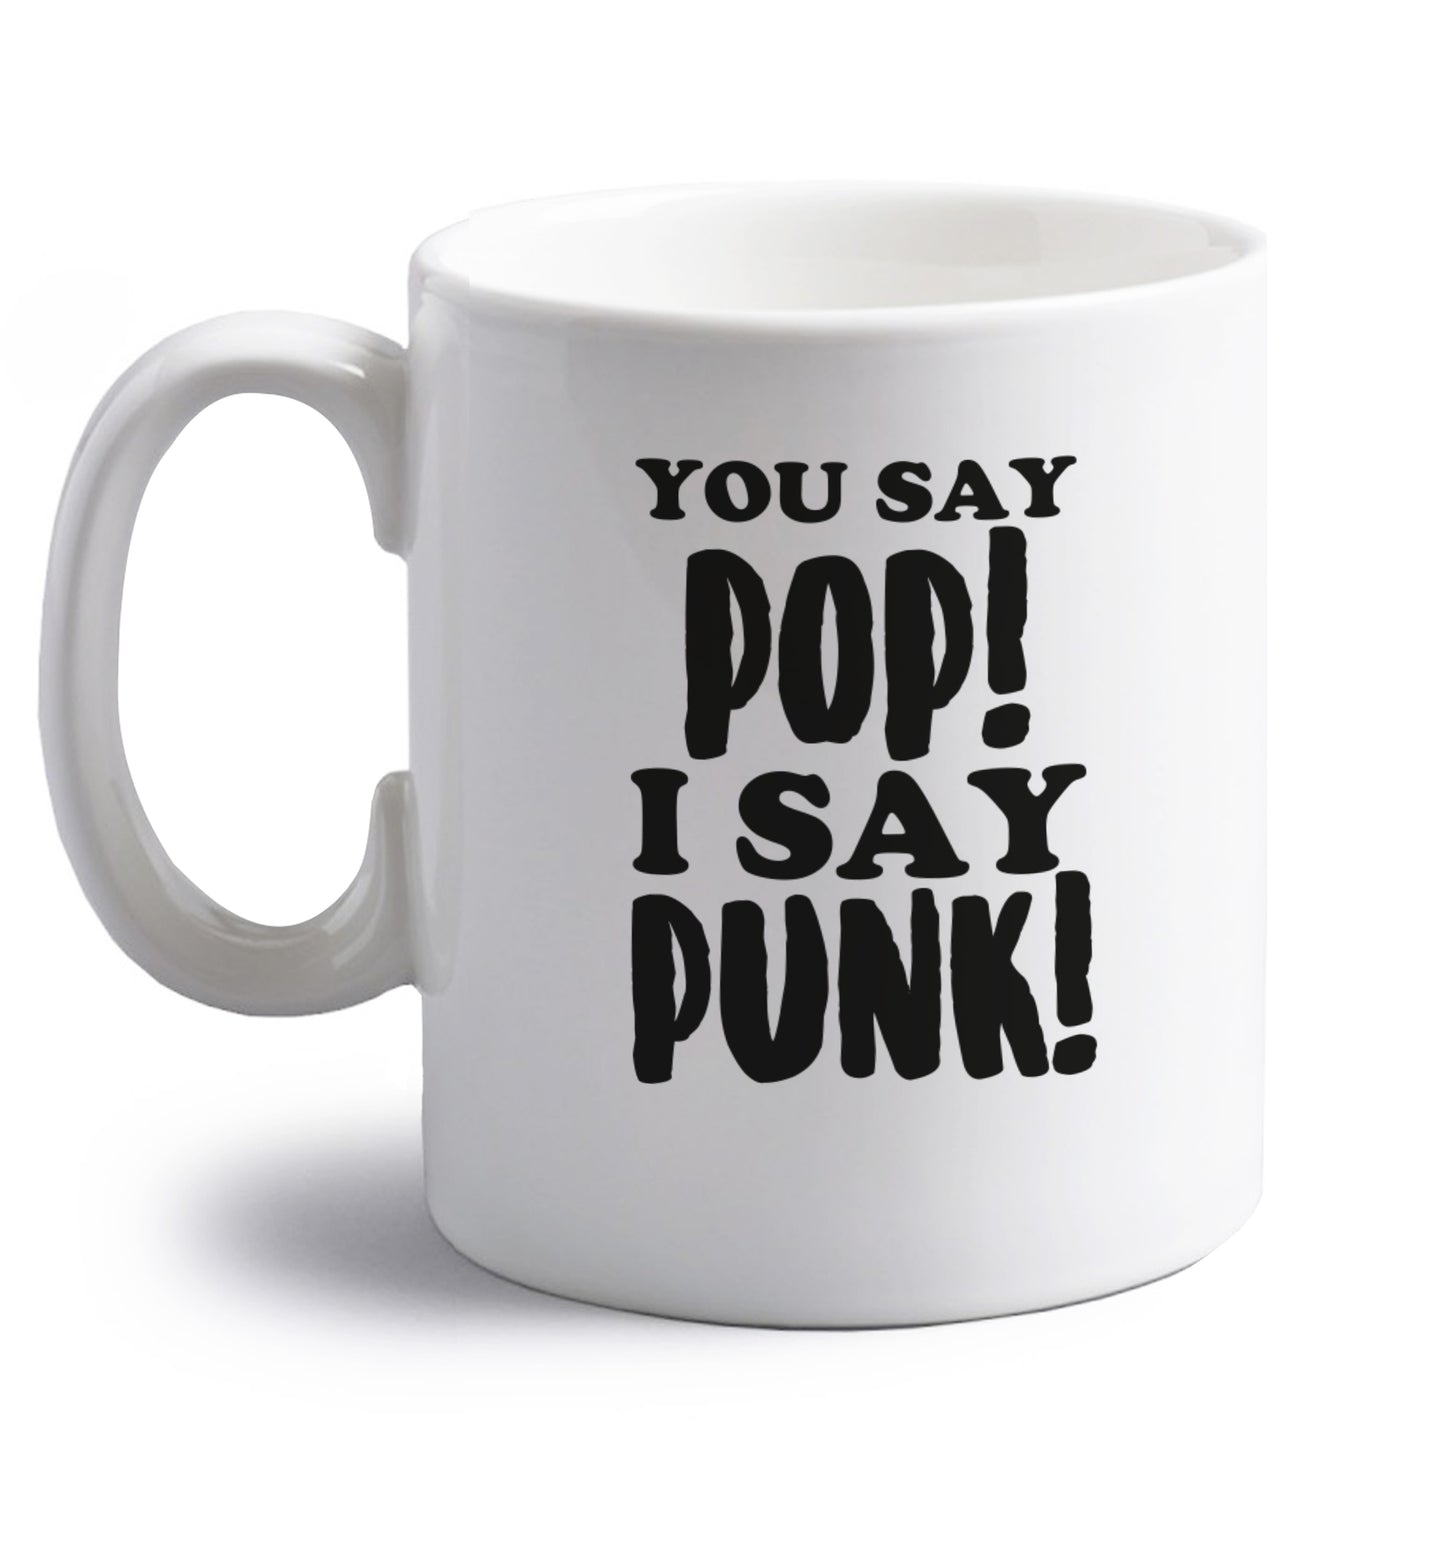 You say pop I say punk! right handed white ceramic mug 